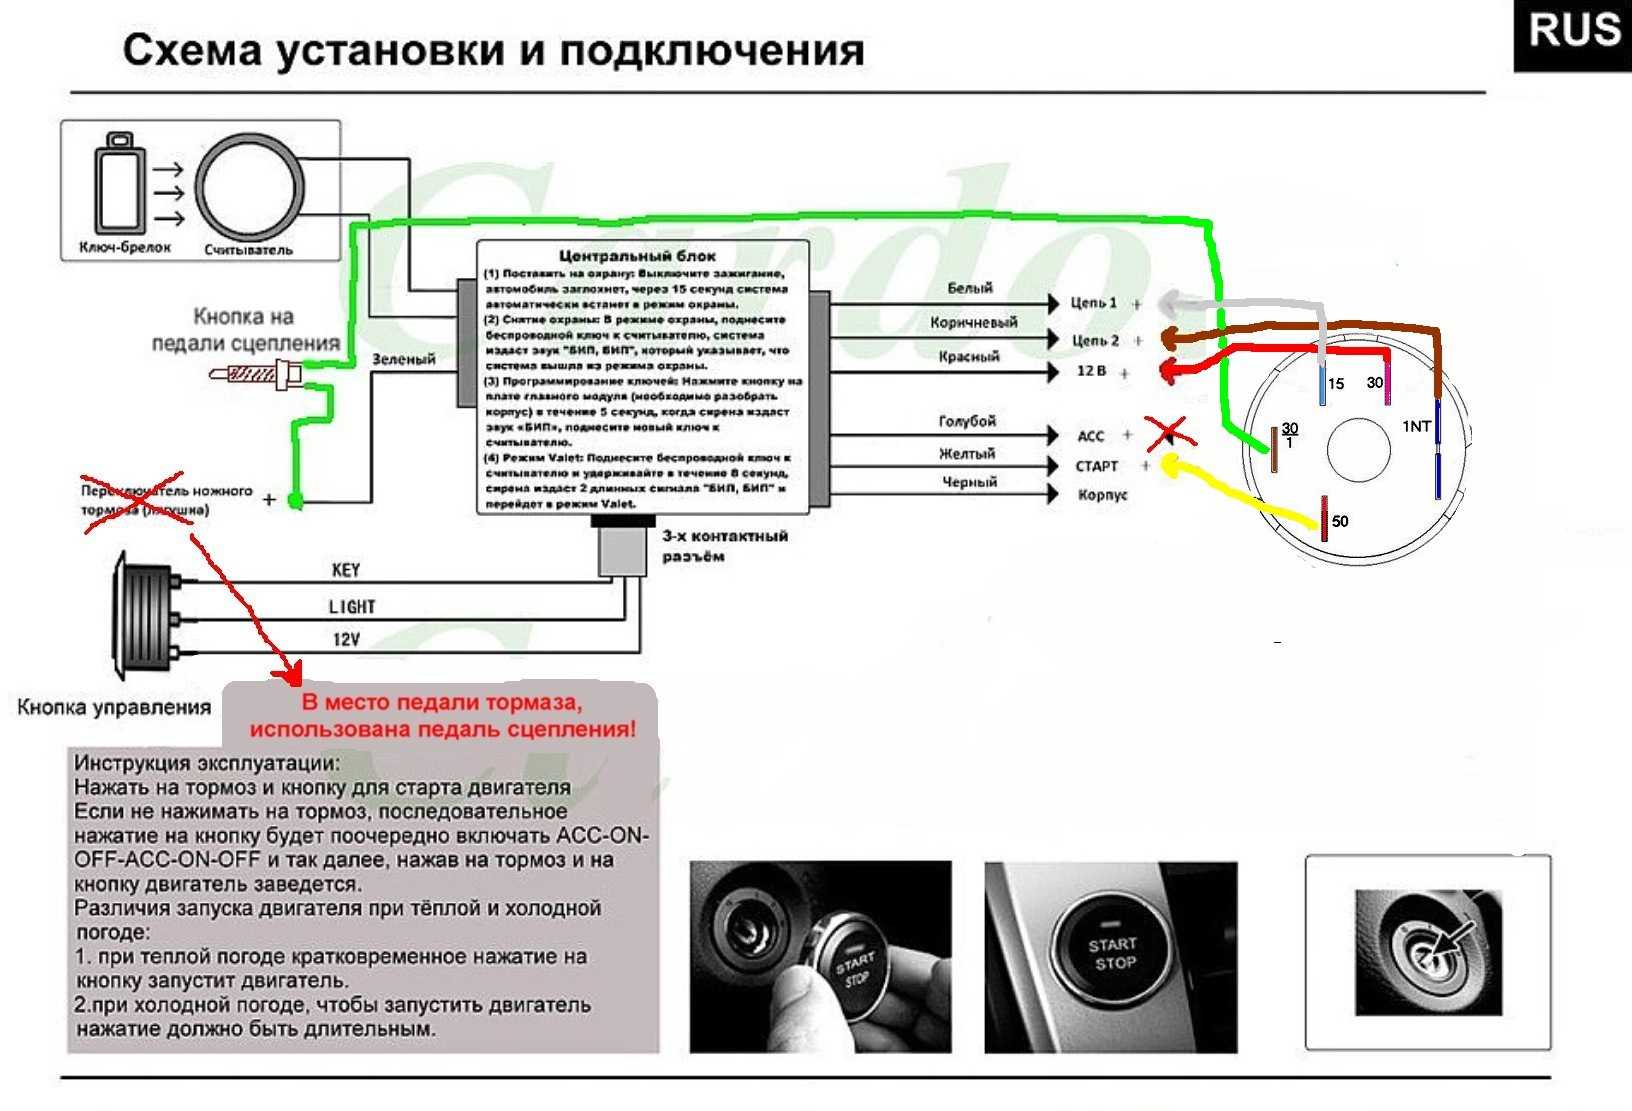 Smart bp hr bracelet user manual инструкция на русском языке